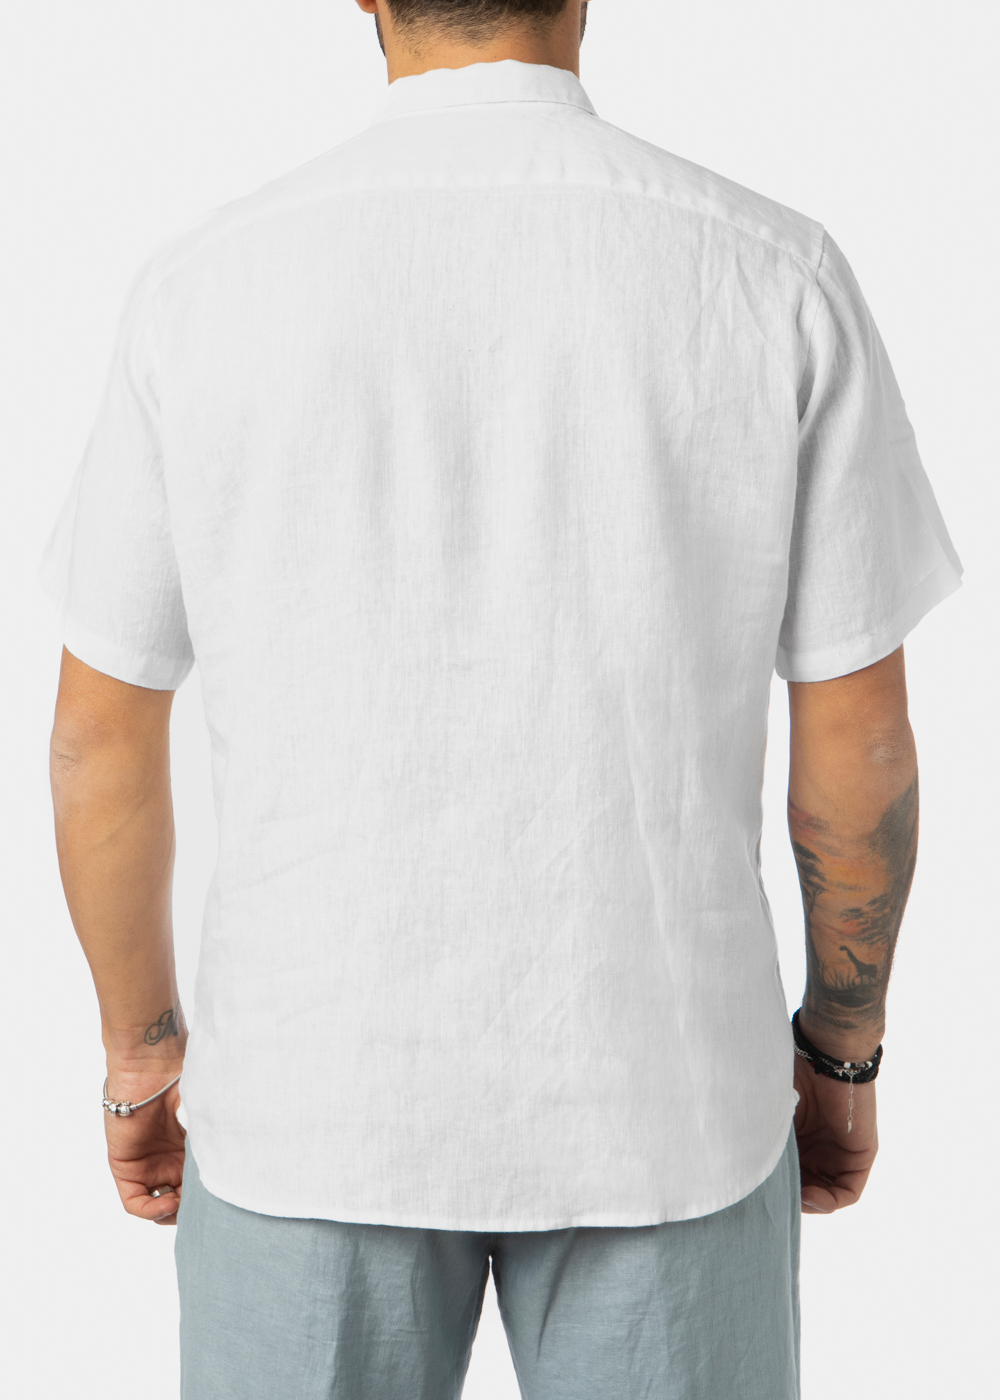 100% Linen White Classic Shirt w/ Short Sleeves